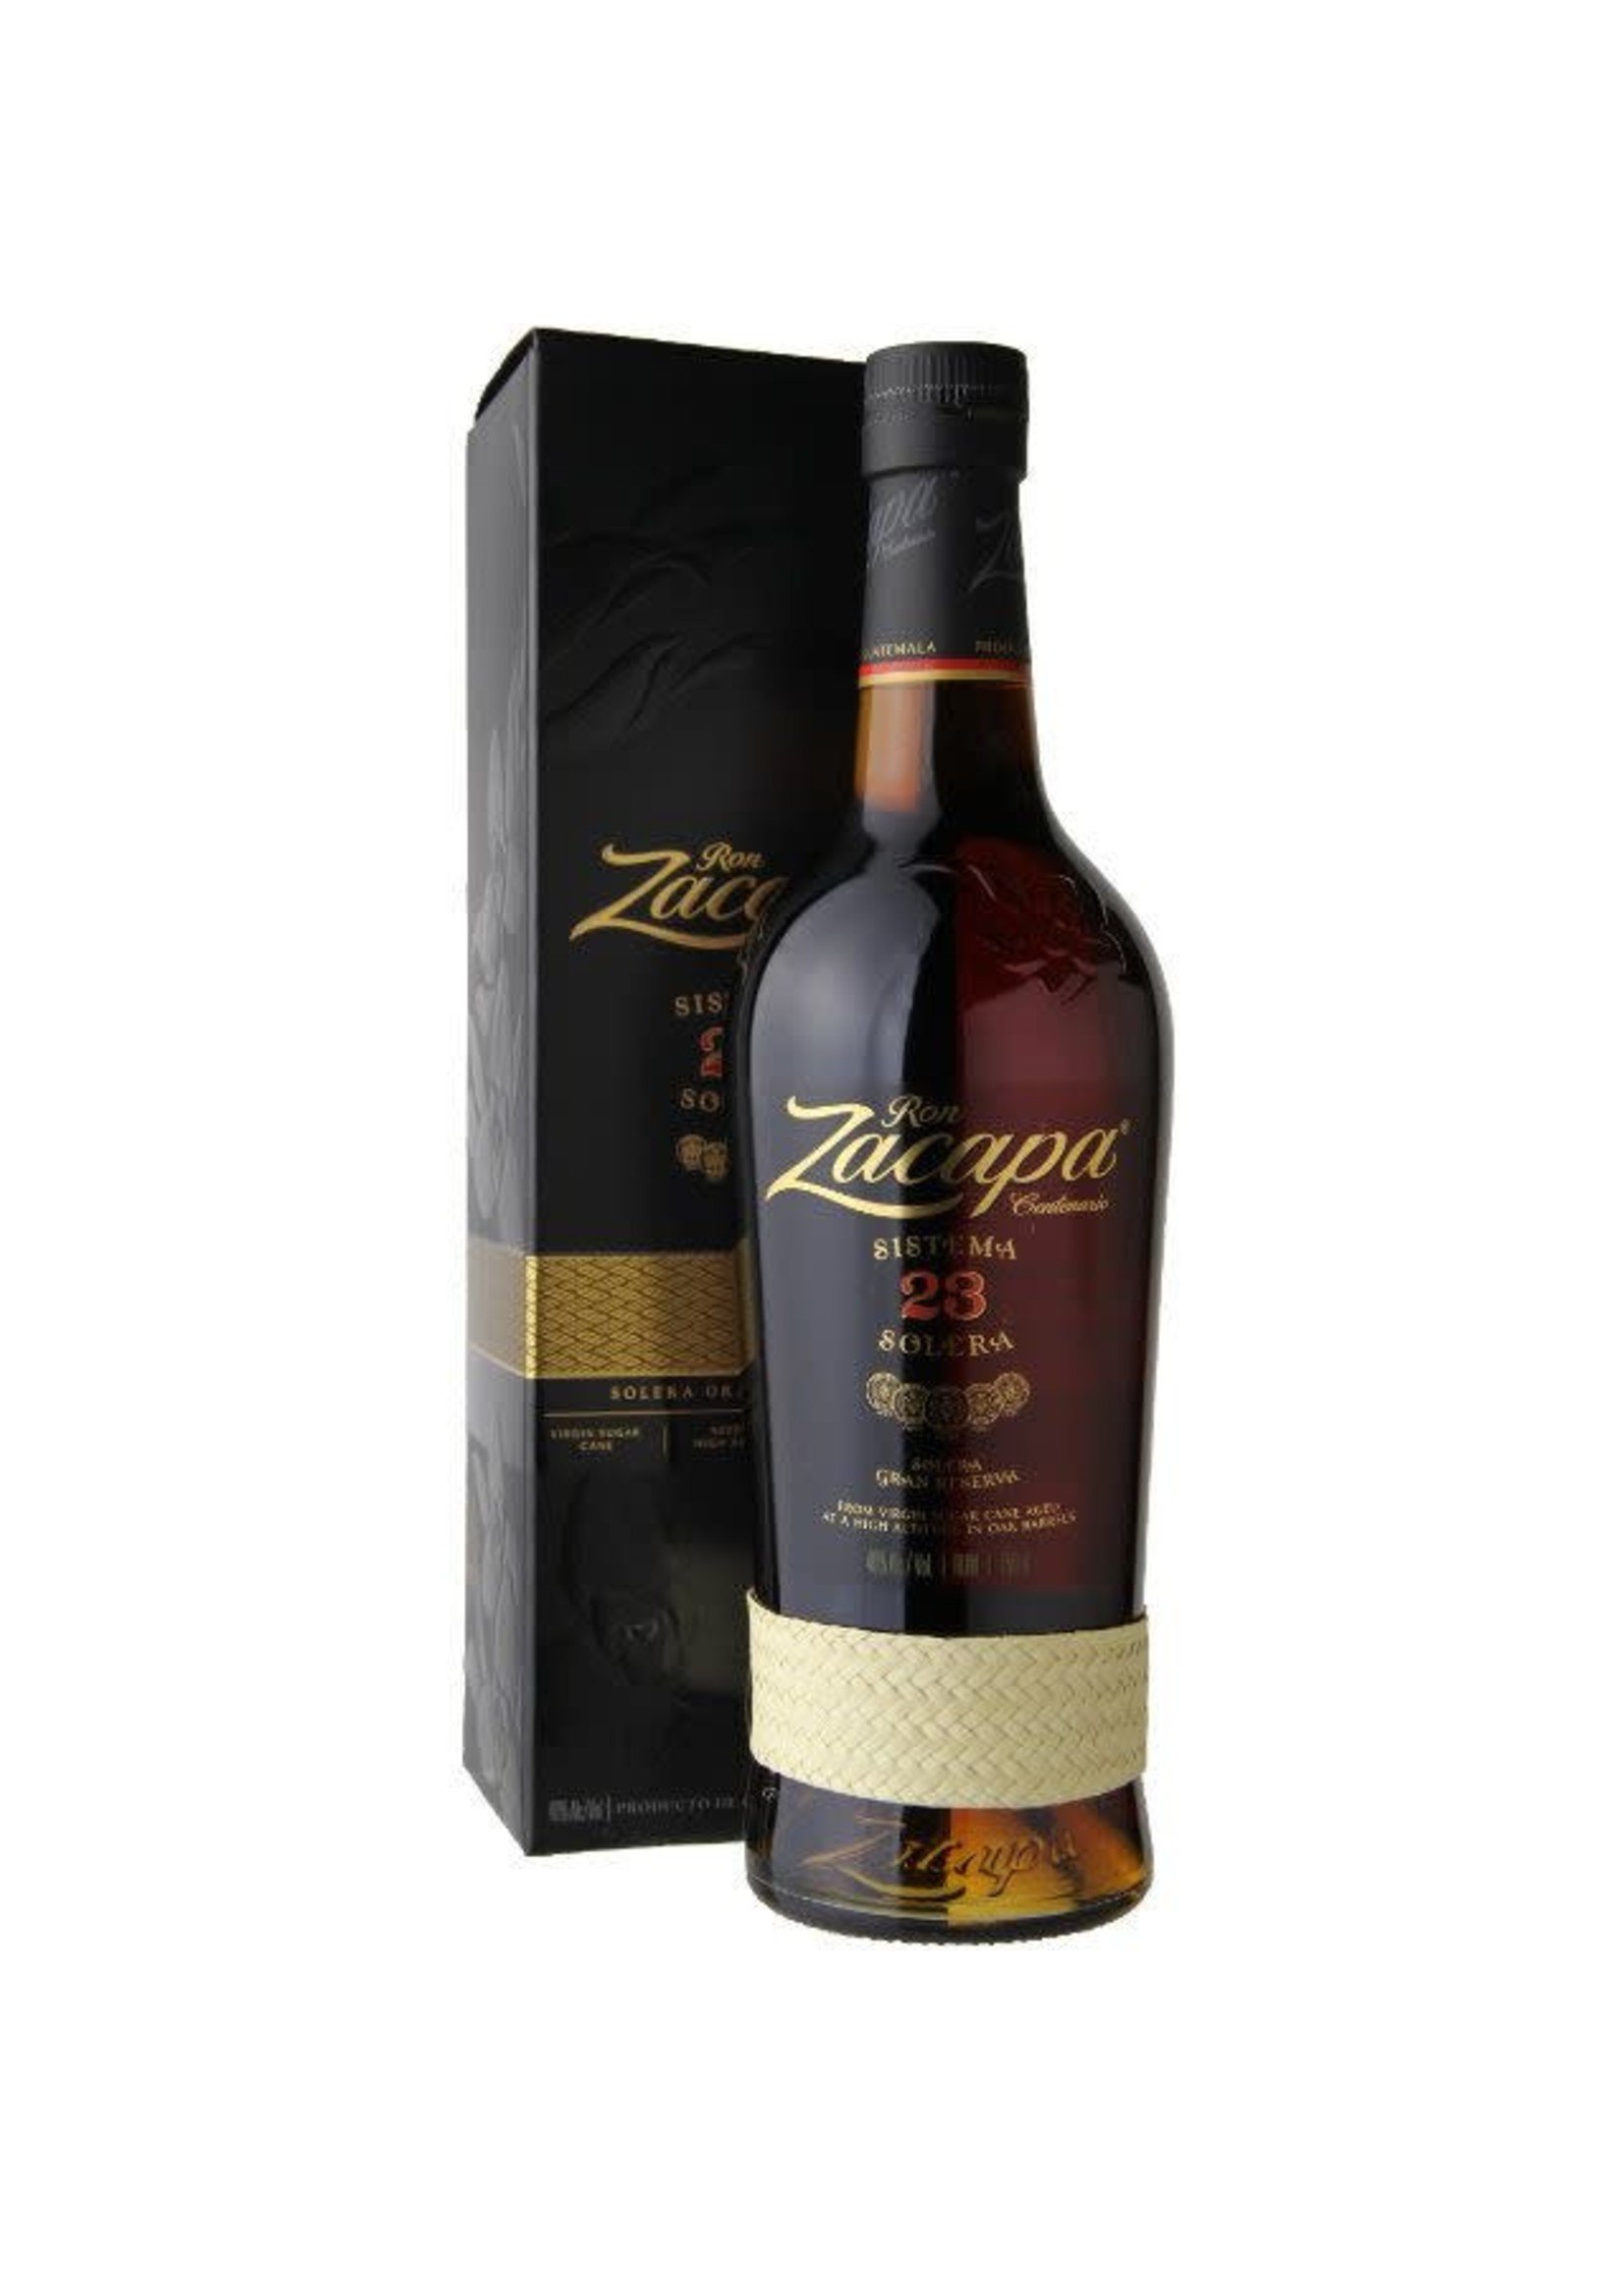 Ron Zacapa Ron Zacapa / 23 Guatemala Rum